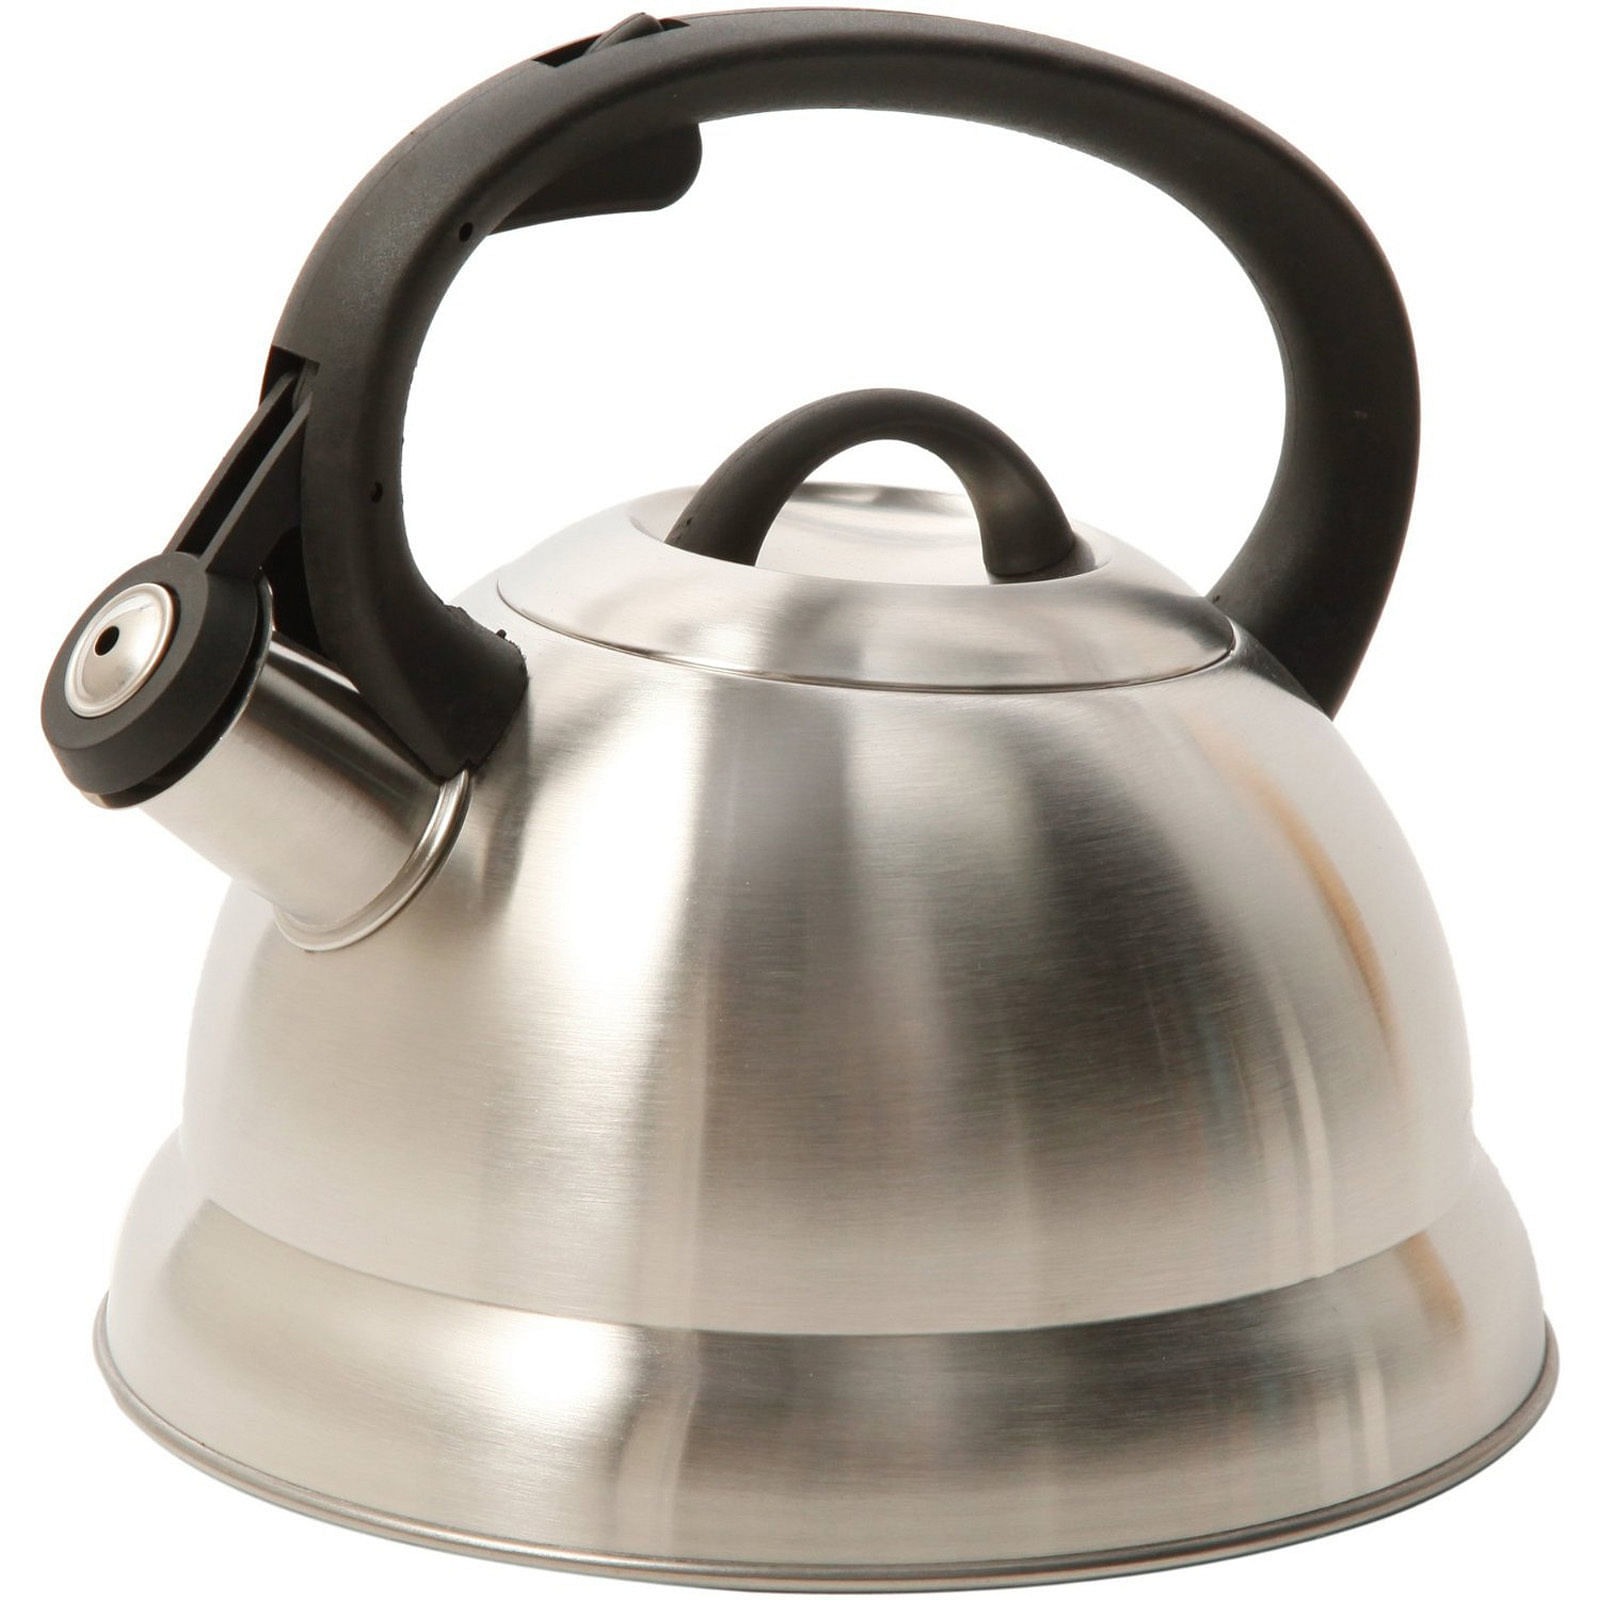 Mr. Coffee Flintshire 1.75 Qt. Stainless Steel Whistling Tea Kettle - $47.31